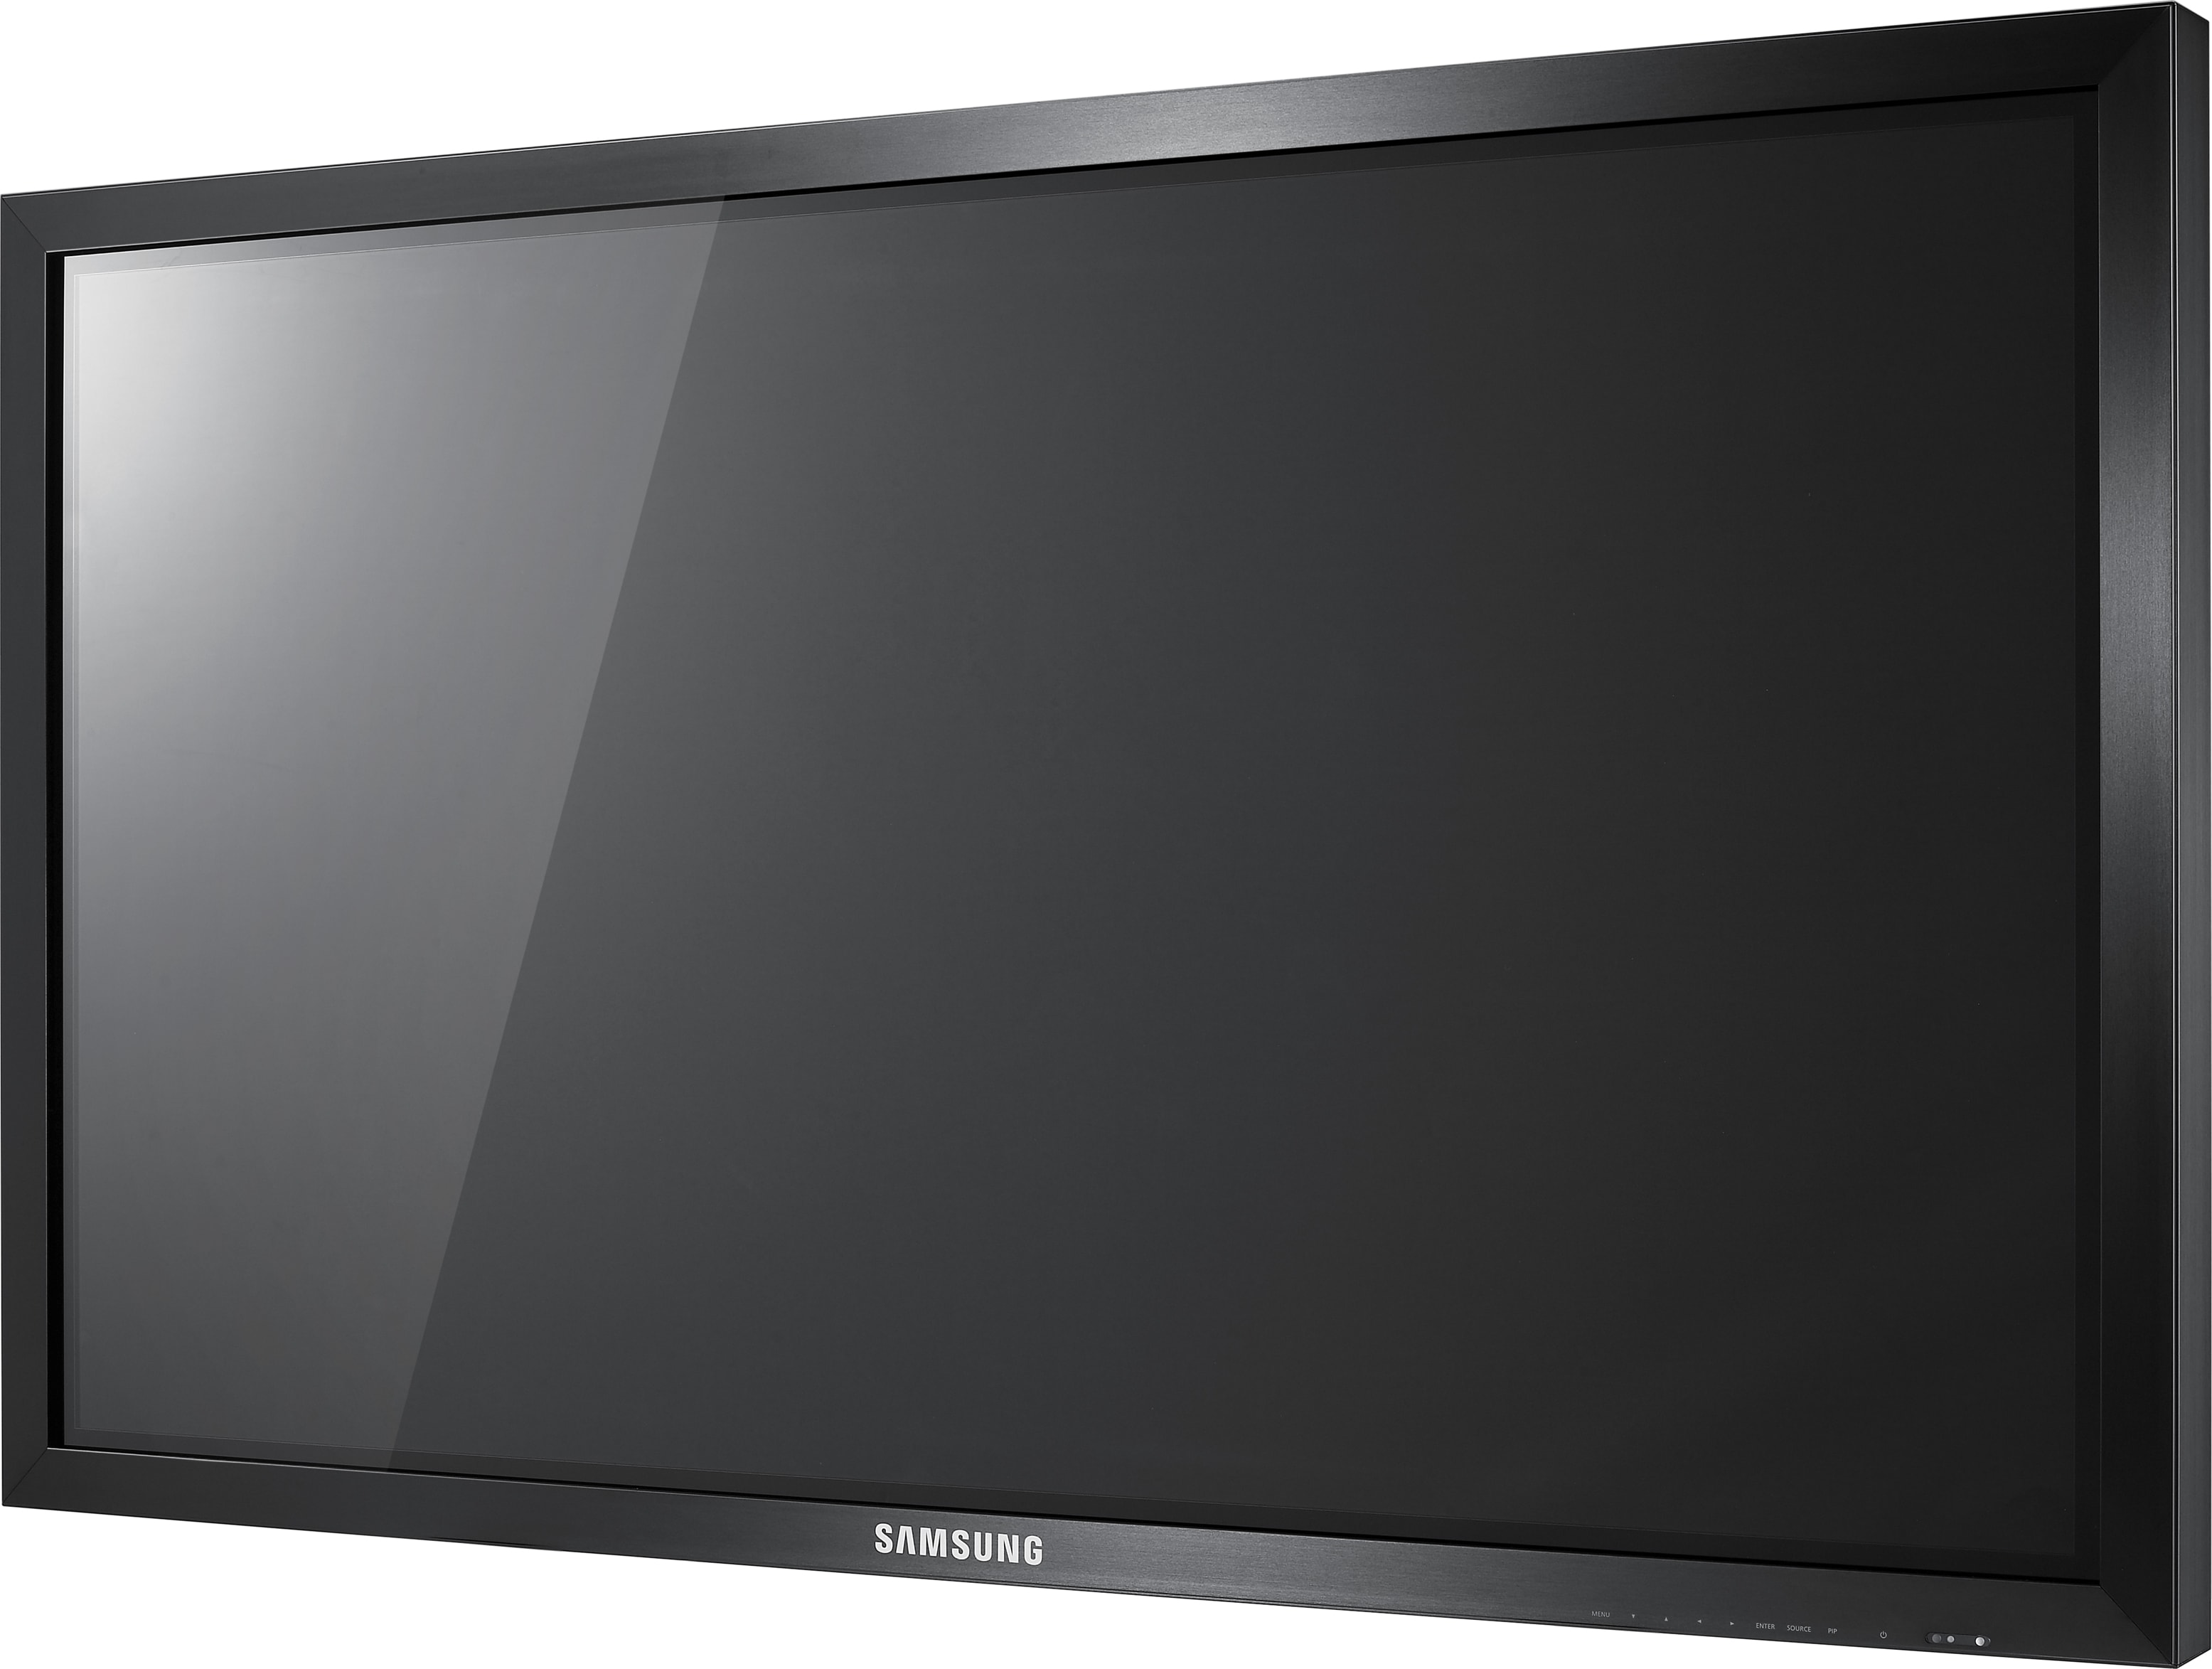 Samsung 650ts 65 Touch Screen Lcd Display Techedu 6365